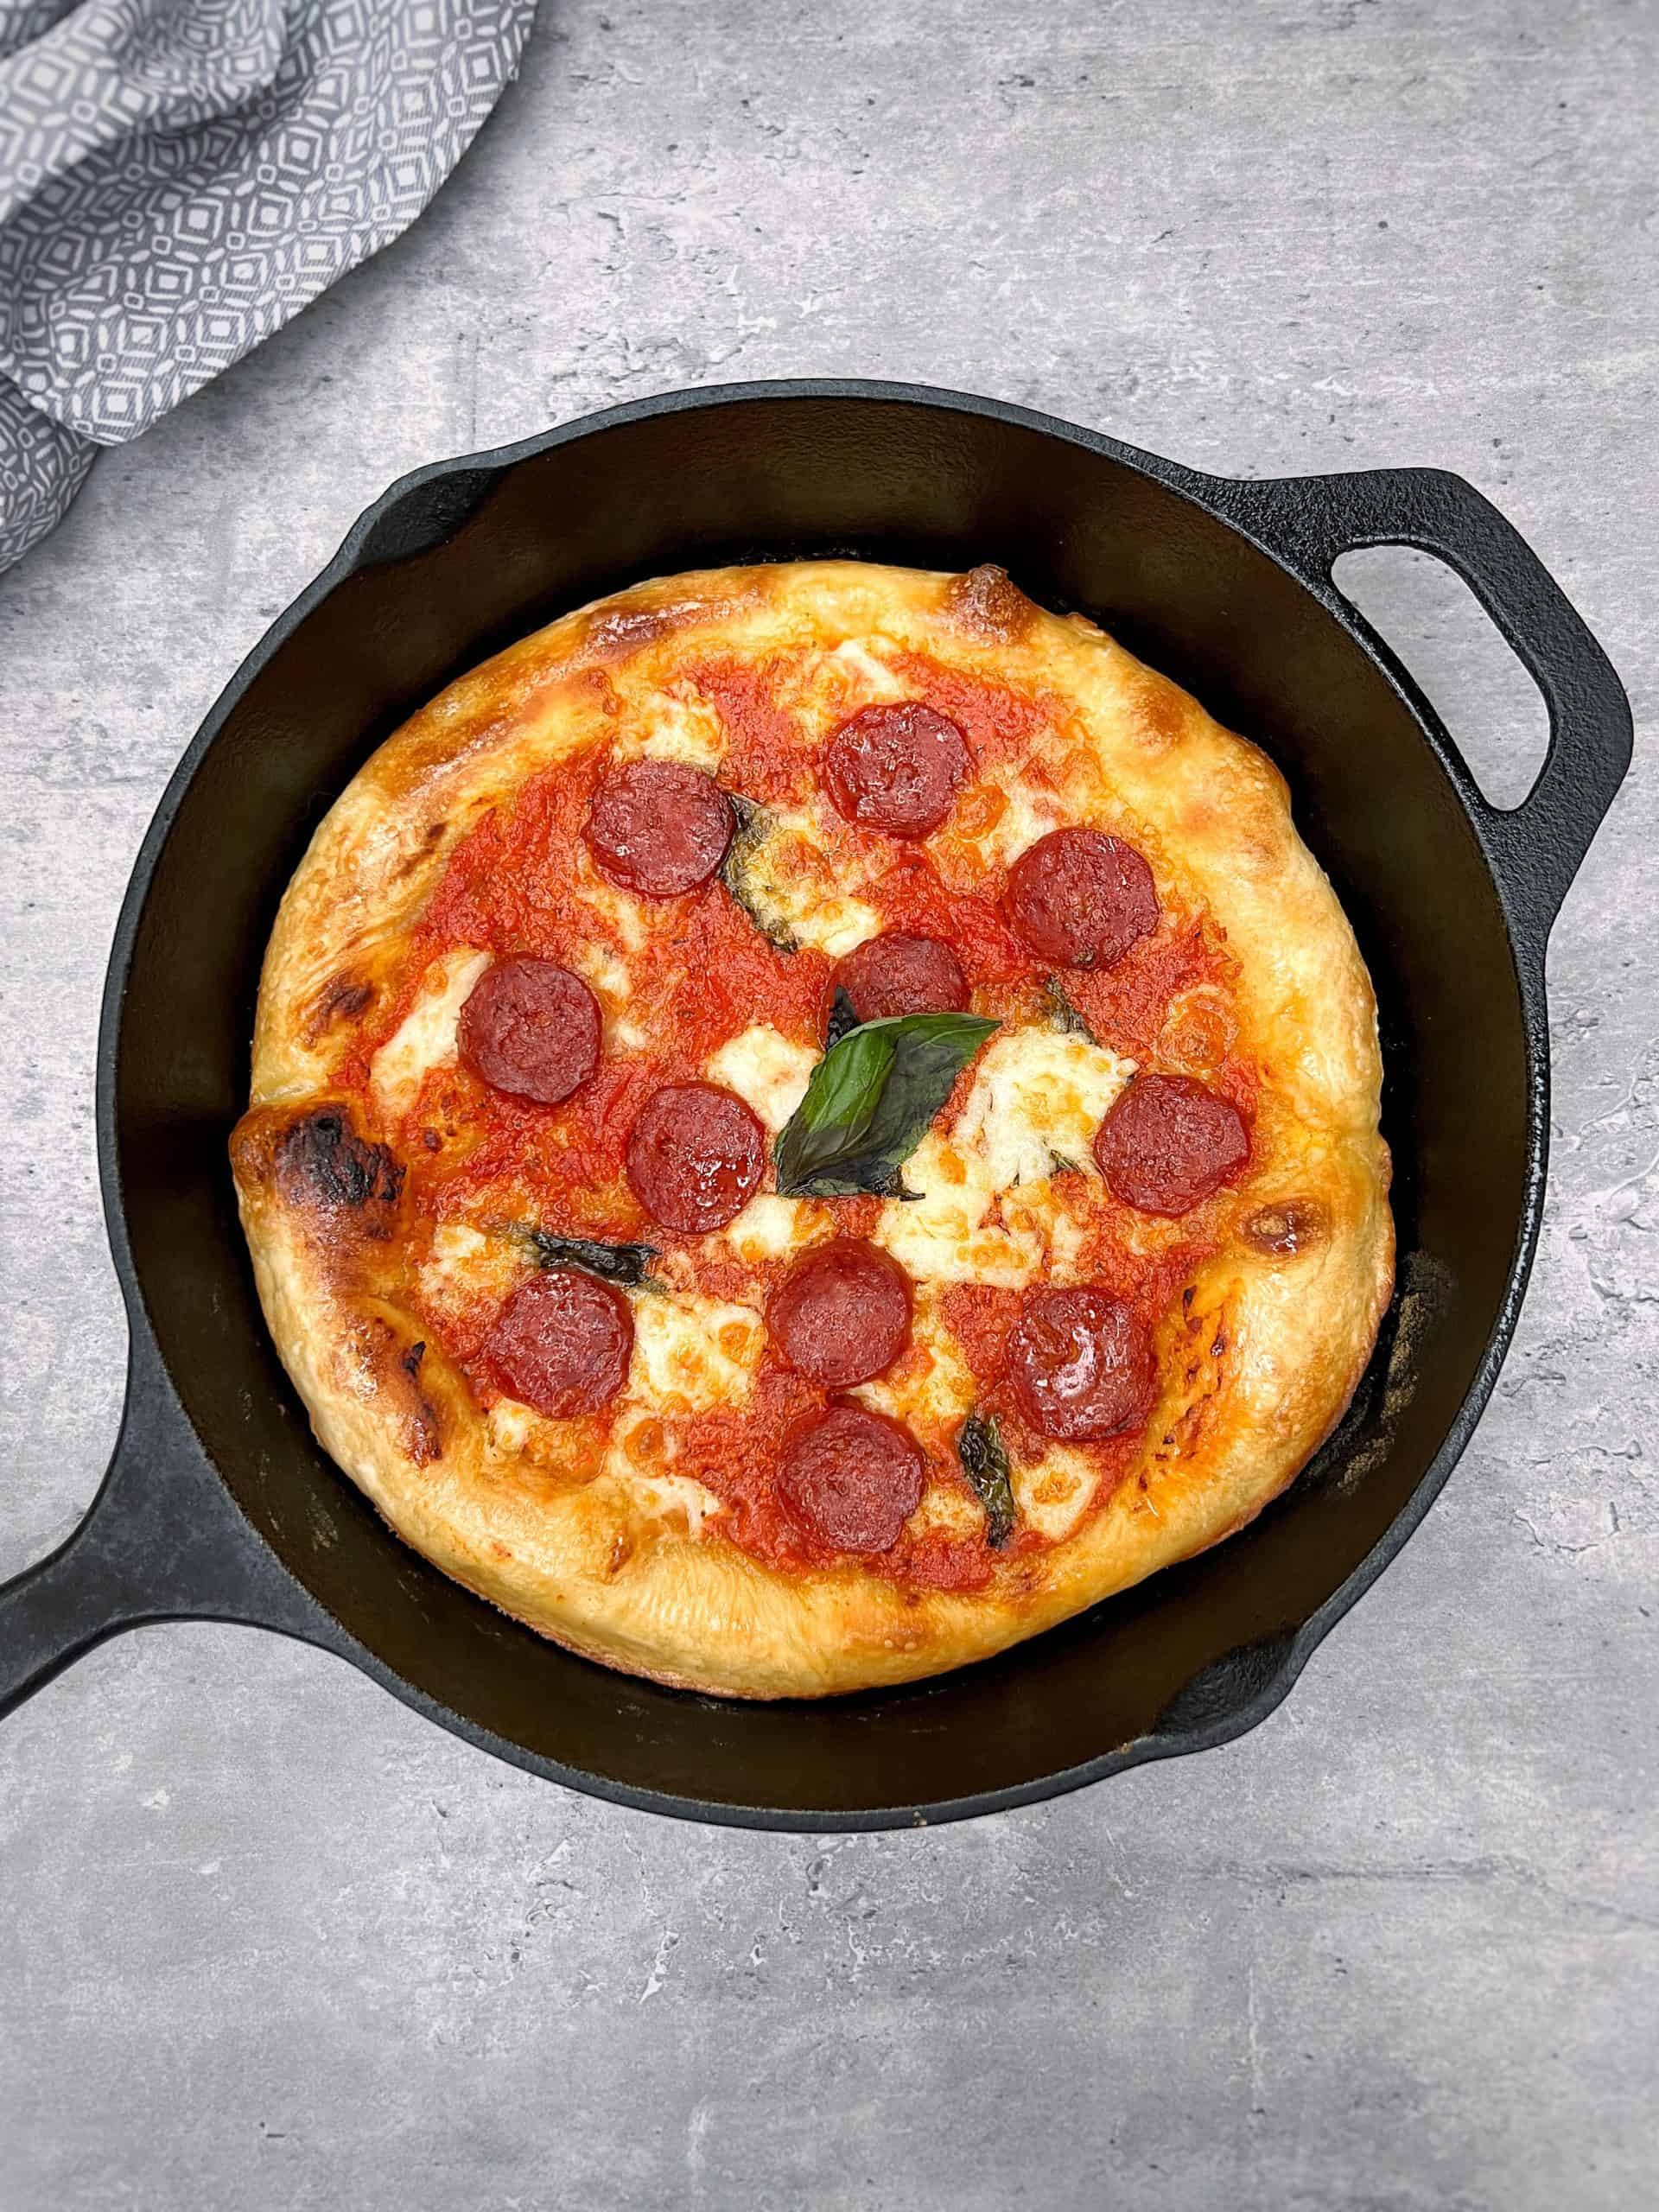 https://cdn.thelondoneconomic.com/wp-content/uploads/2022/05/3181915b-cast-iron-frying-pan-pizza-recipe-jonathan-hatchman-london-economic-scaled.jpg